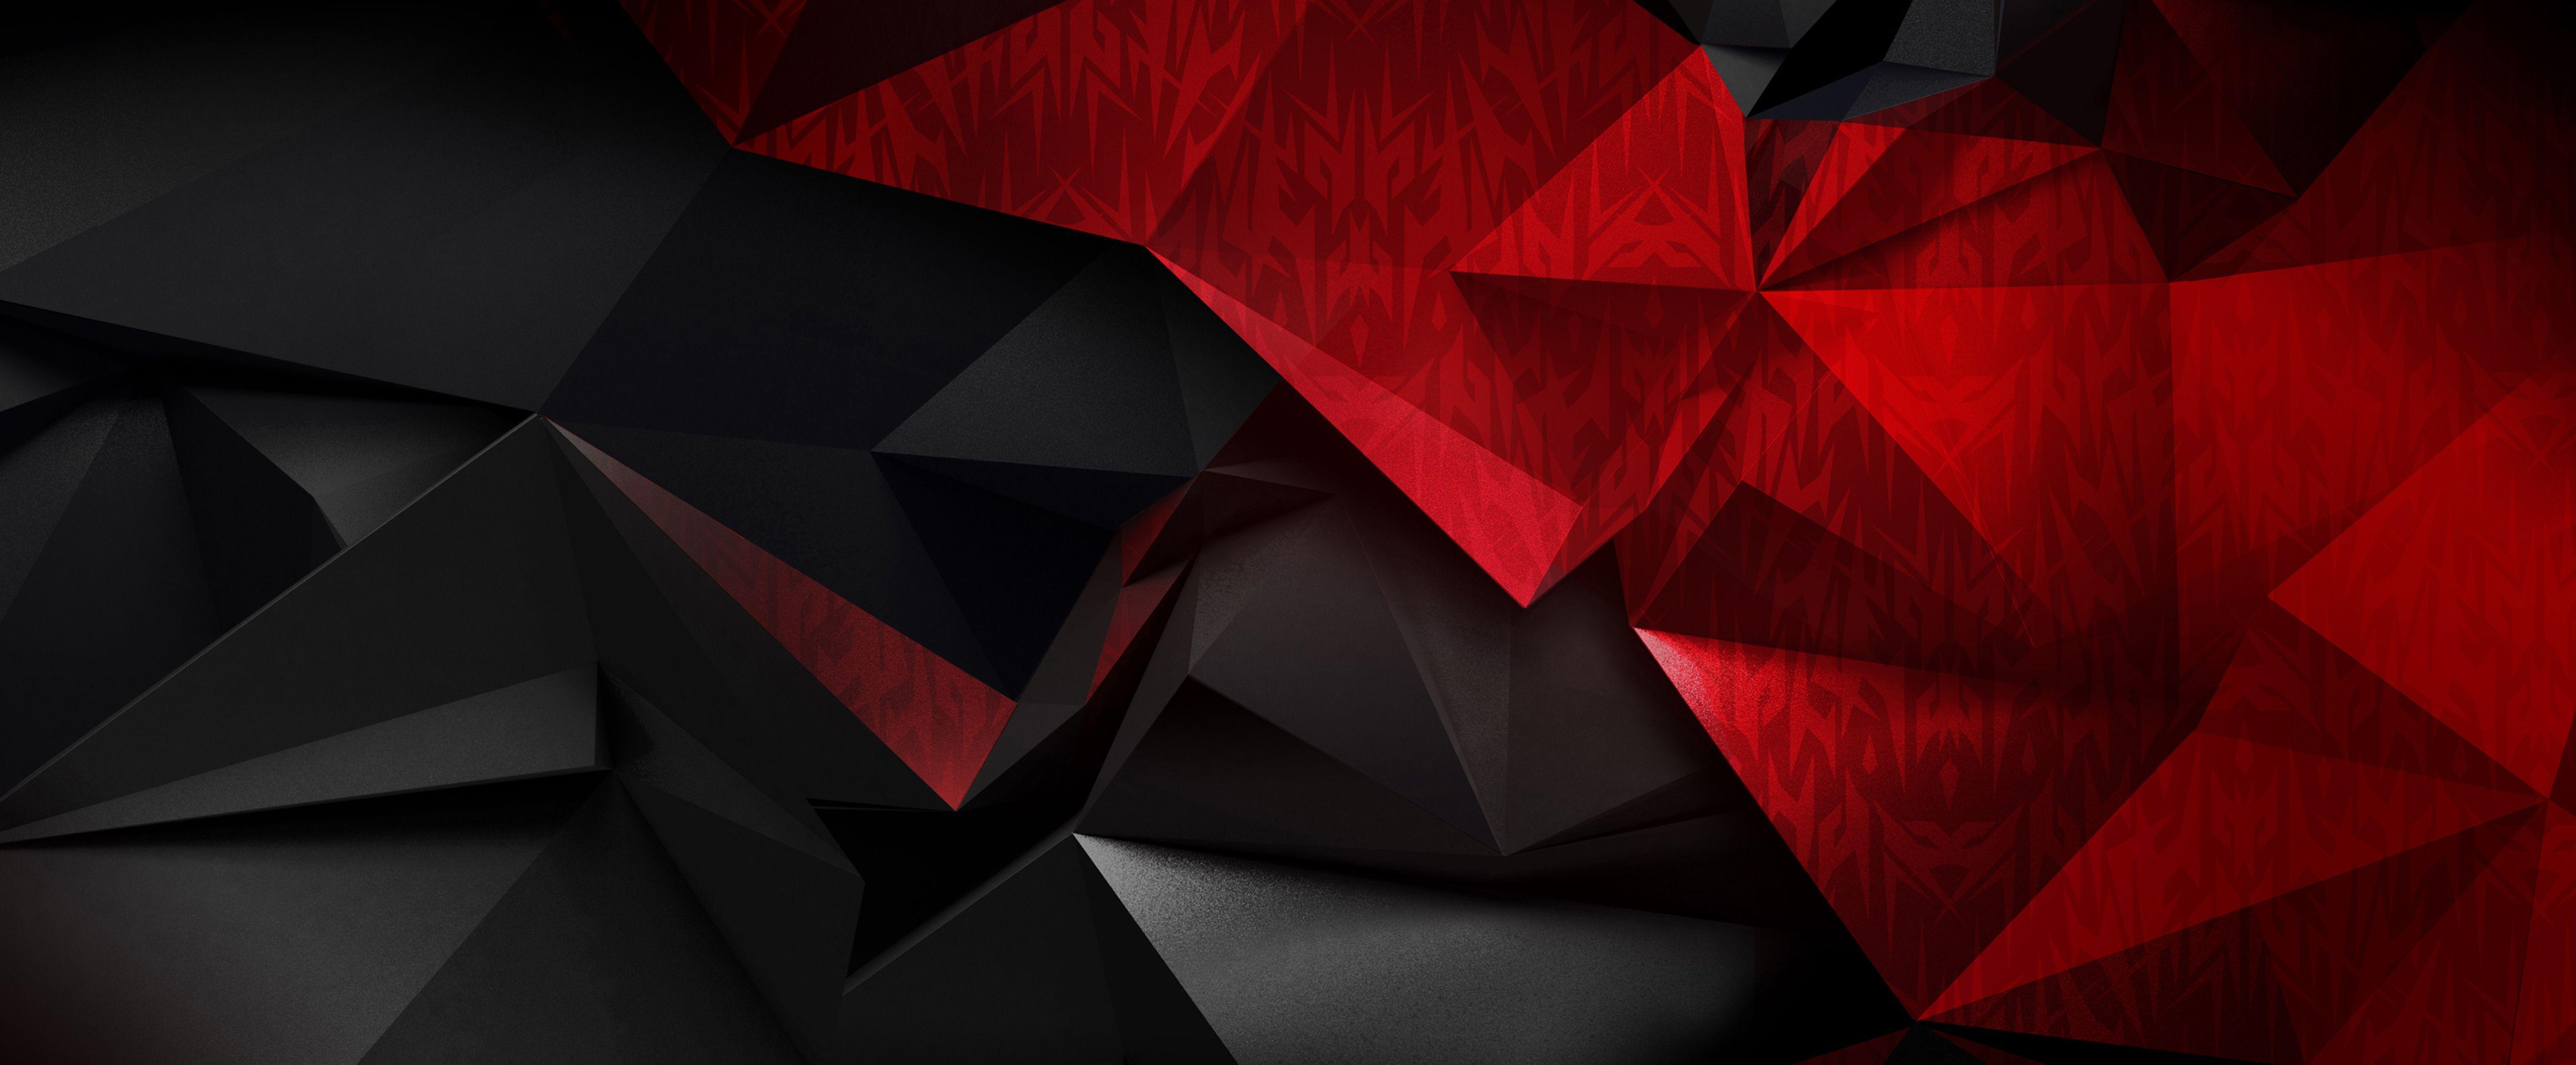 Acer Predator. Multi Color Wallpaper (21:9 [5K]). Red background image, Red background, Background image hd